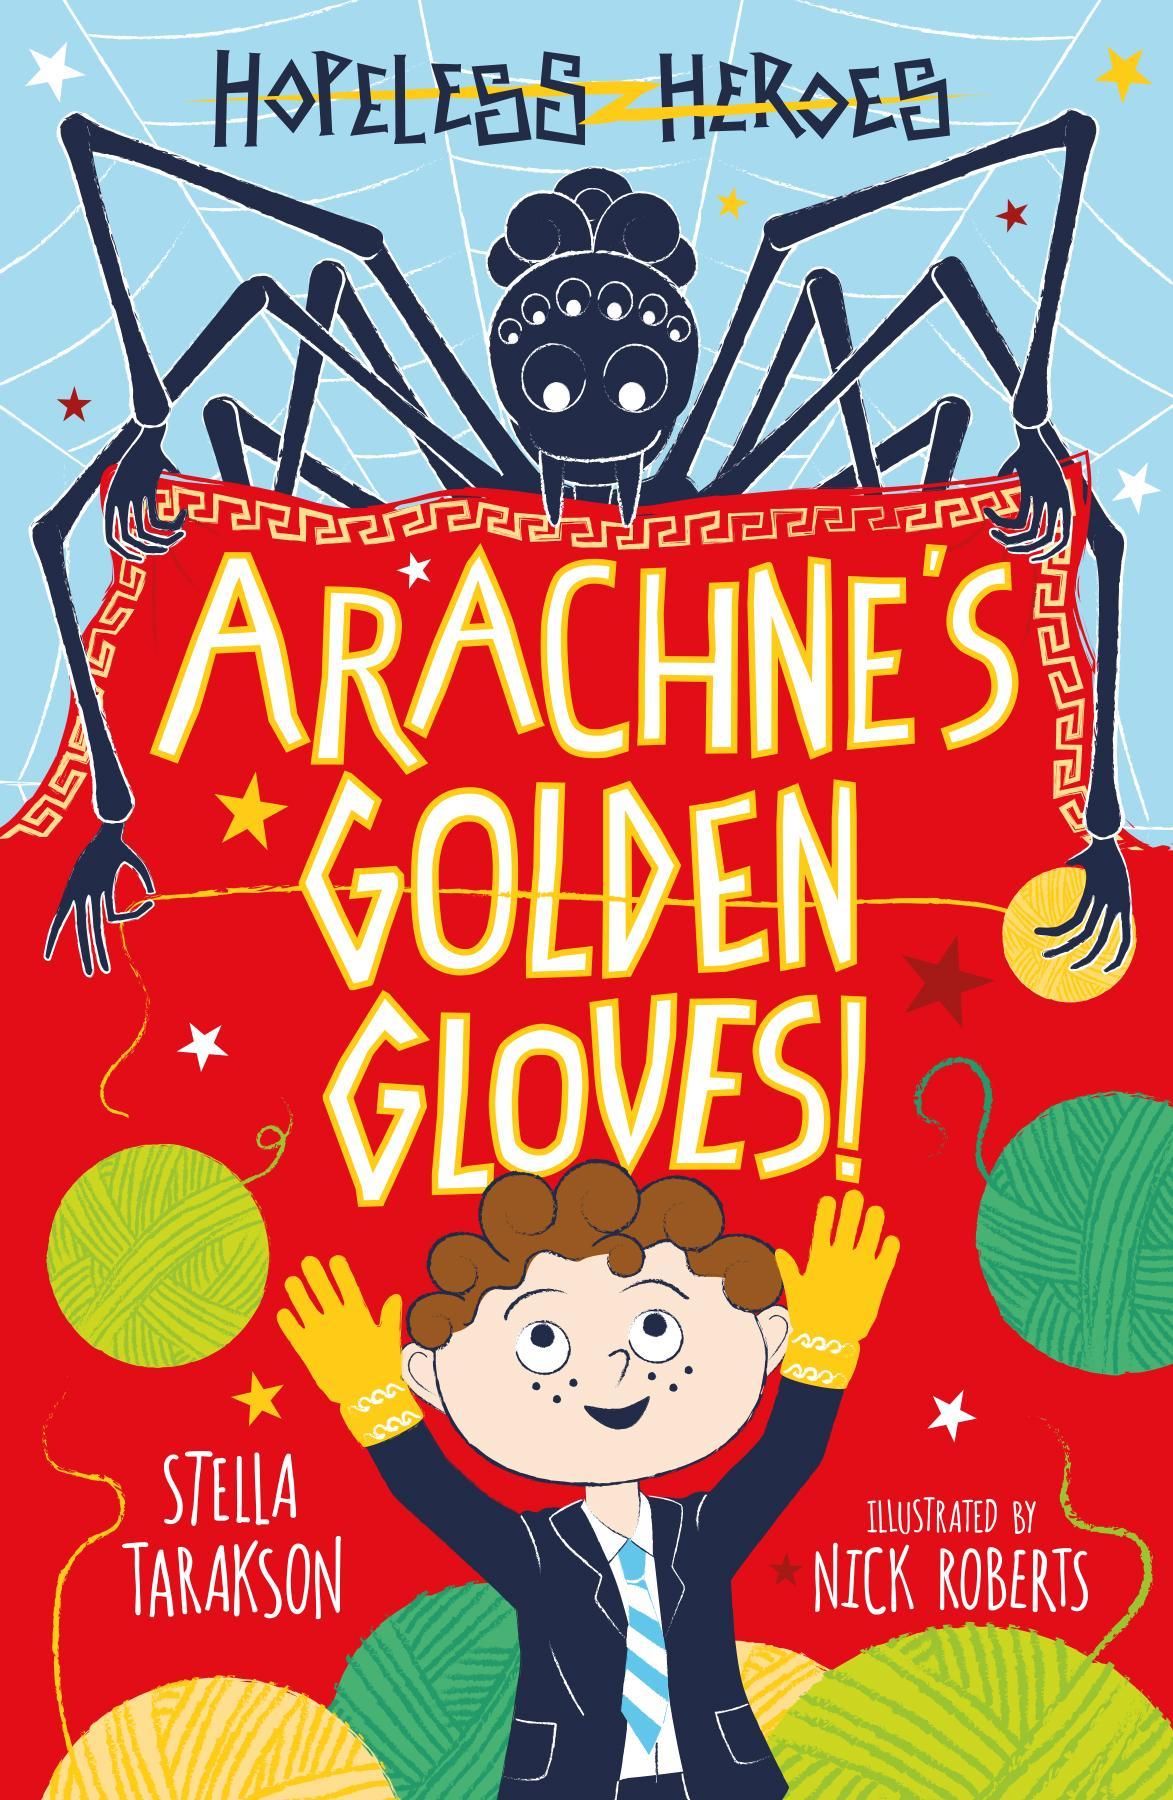 Arachne's Golden Gloves! - Stella Tarakson